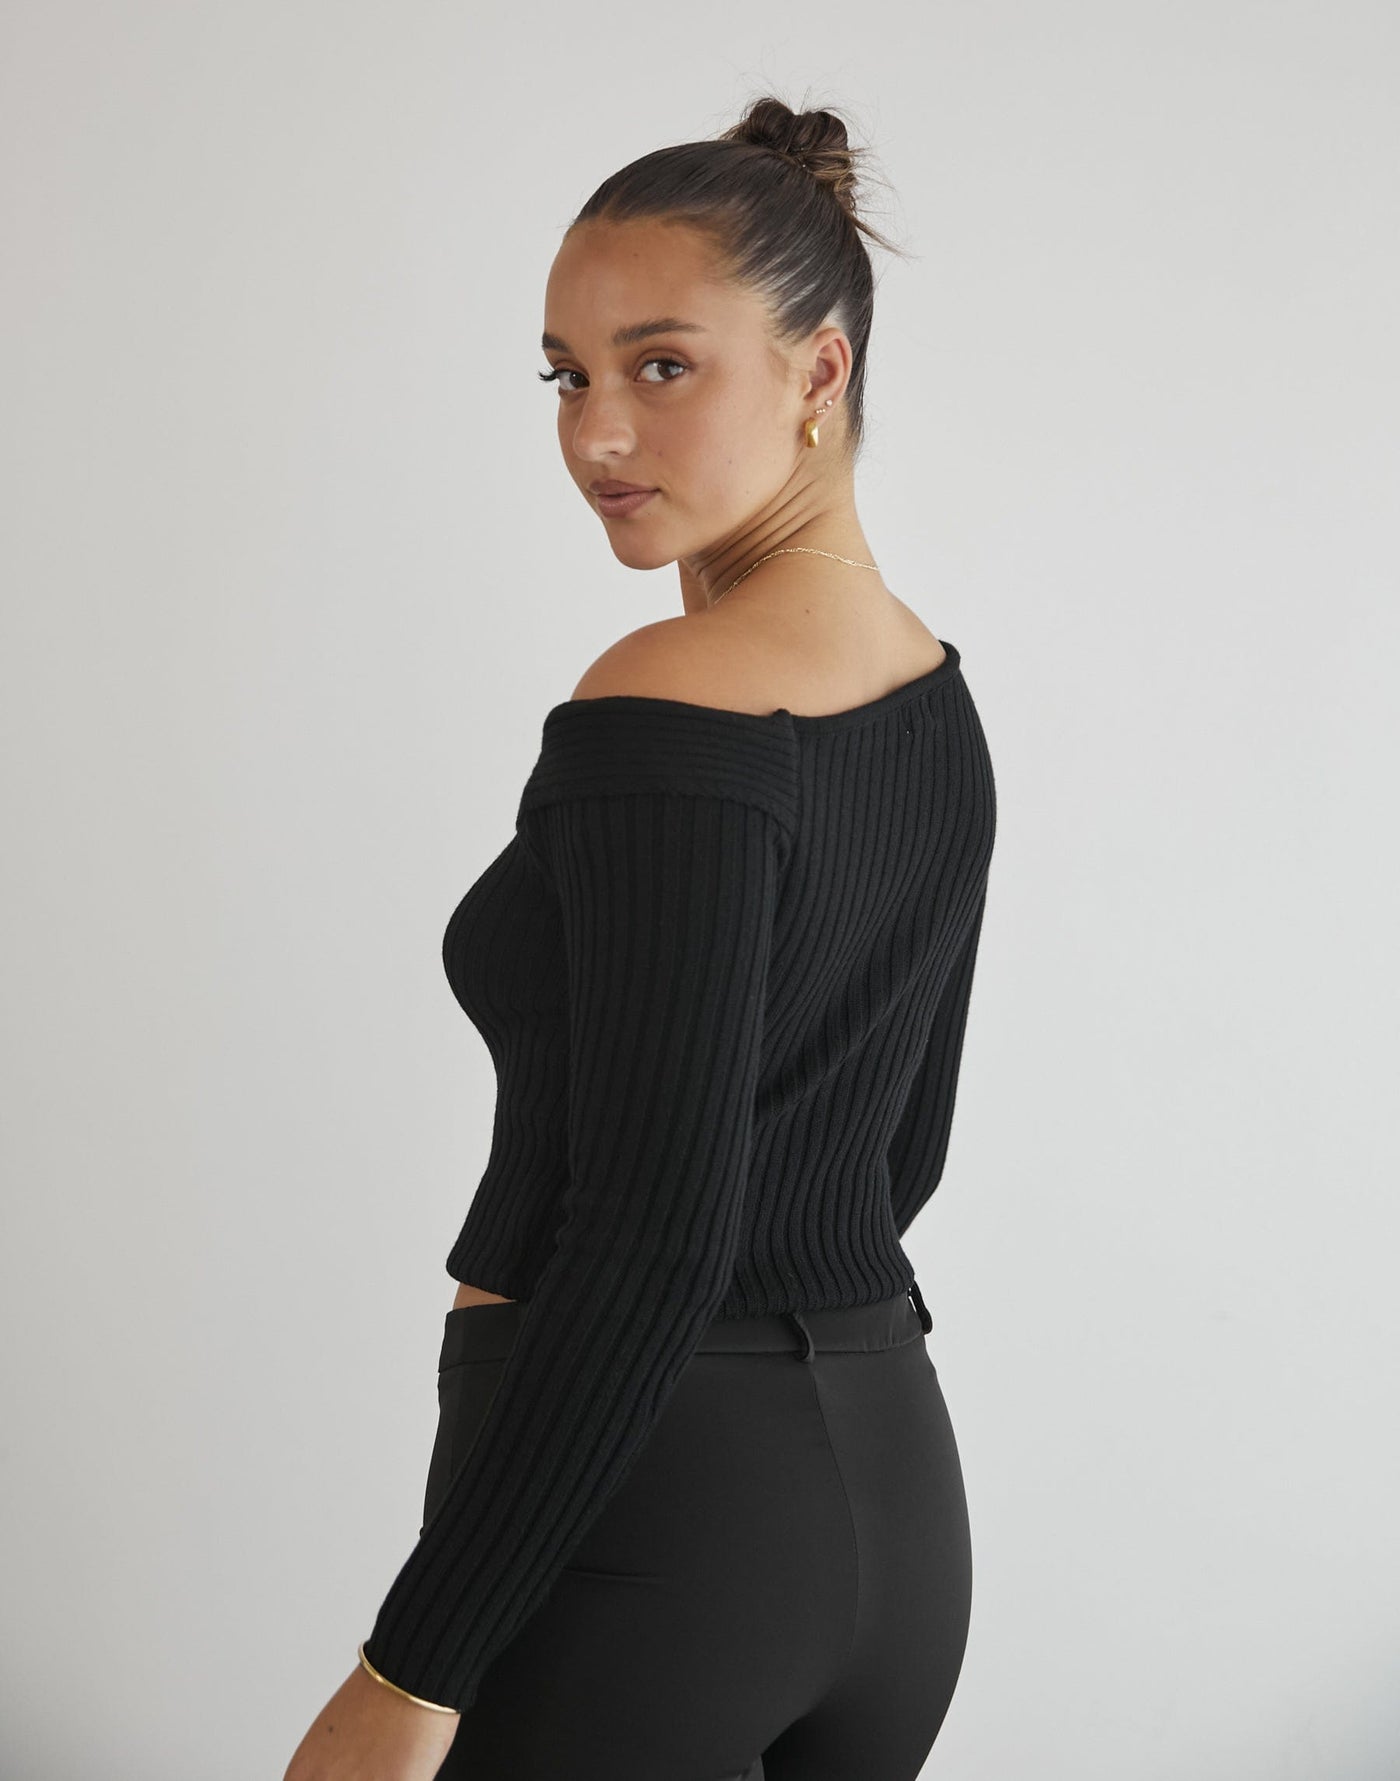 Madon Long Sleeve Knit Top (Black) - Black Long Sleeve Knit Top - Women's Top - Charcoal Clothing